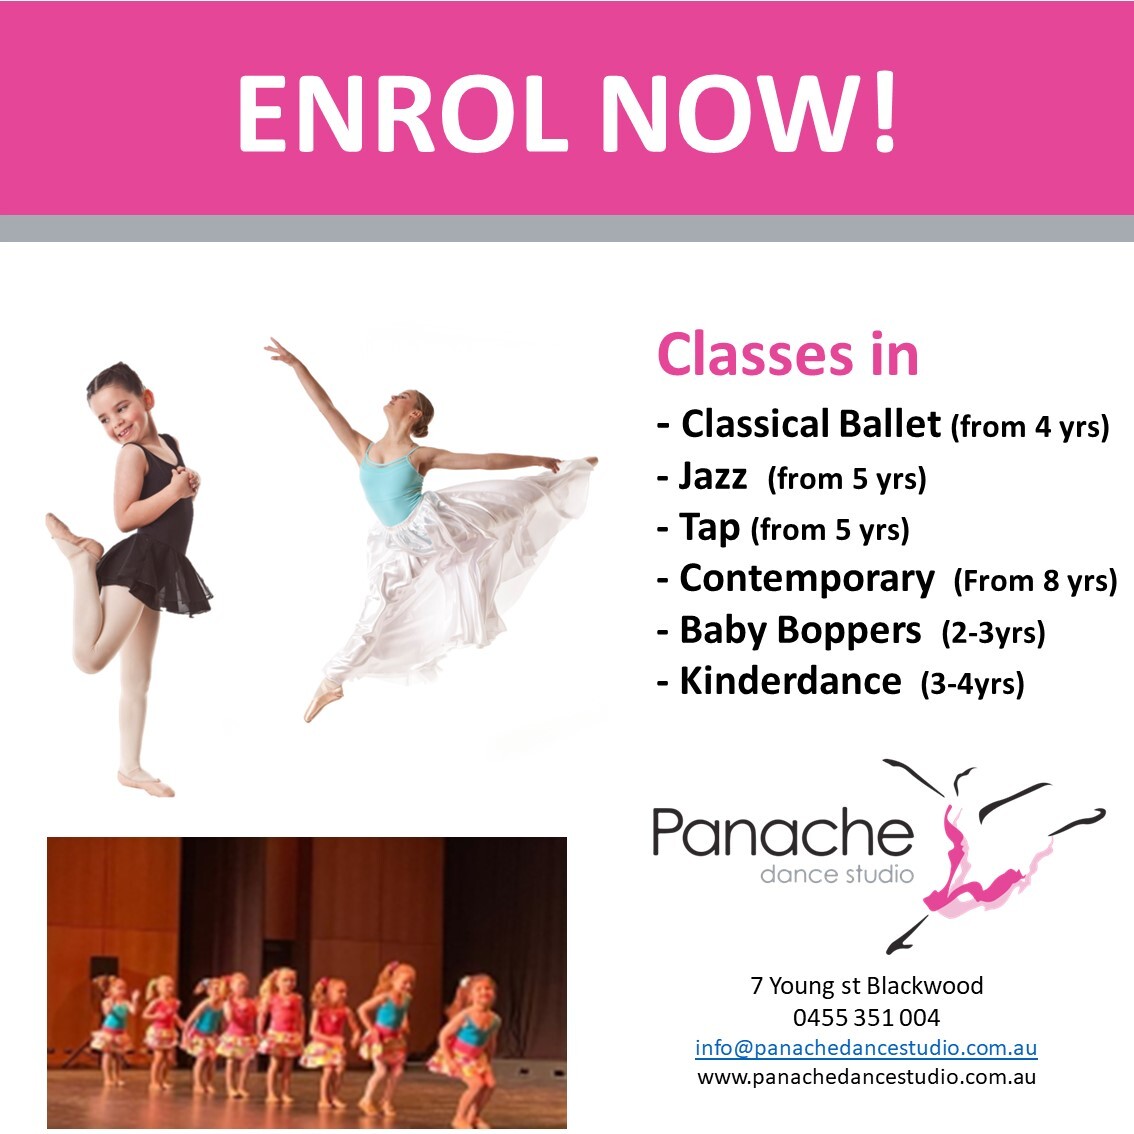 Panache Dance Studio